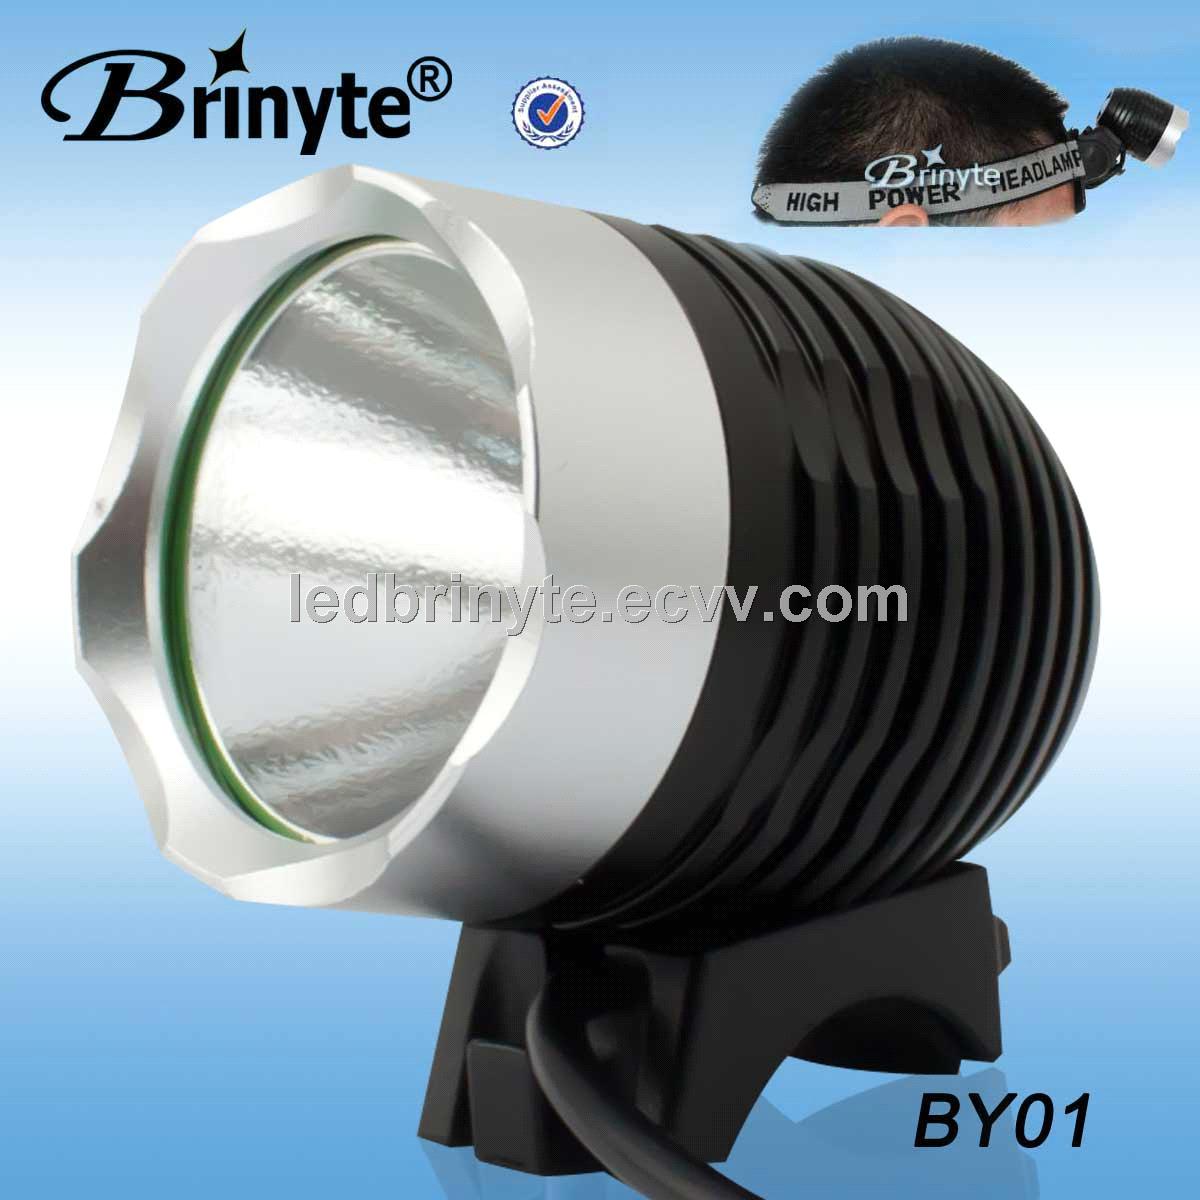 Brinyte Rechargeable High Power CREE XML U2 LED Helmet Bicycle Light